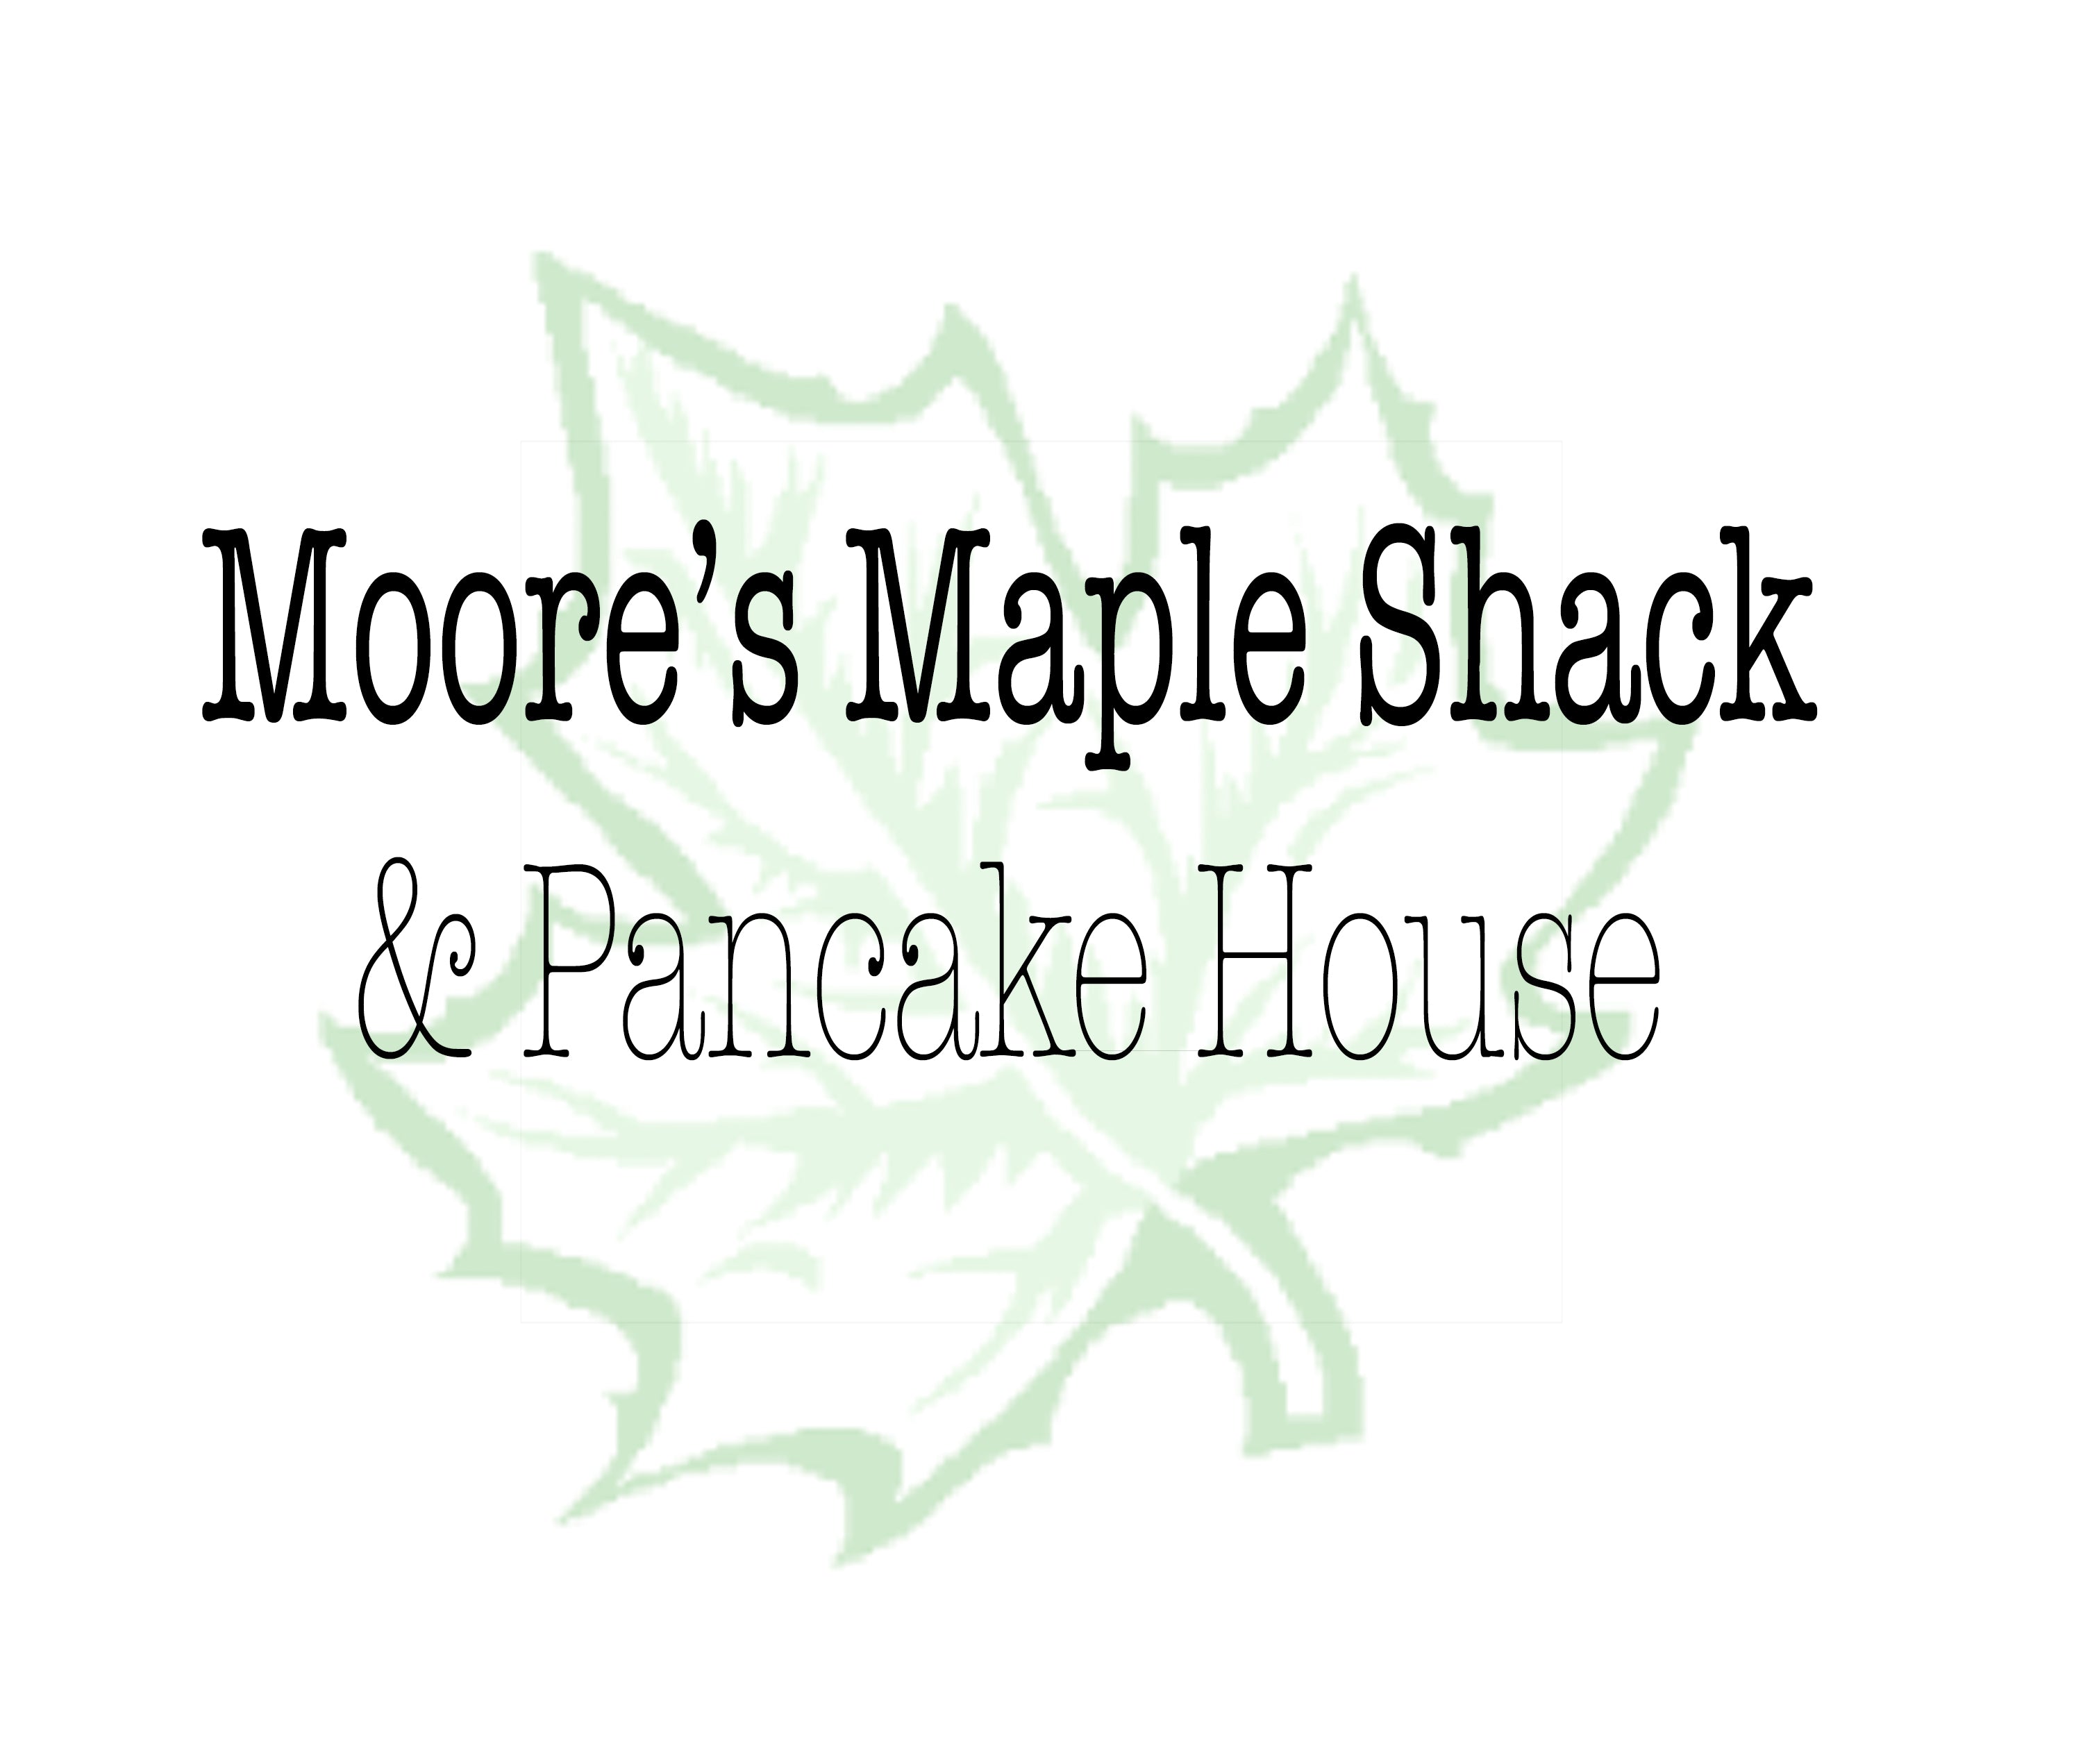 Moore's Maple Shack